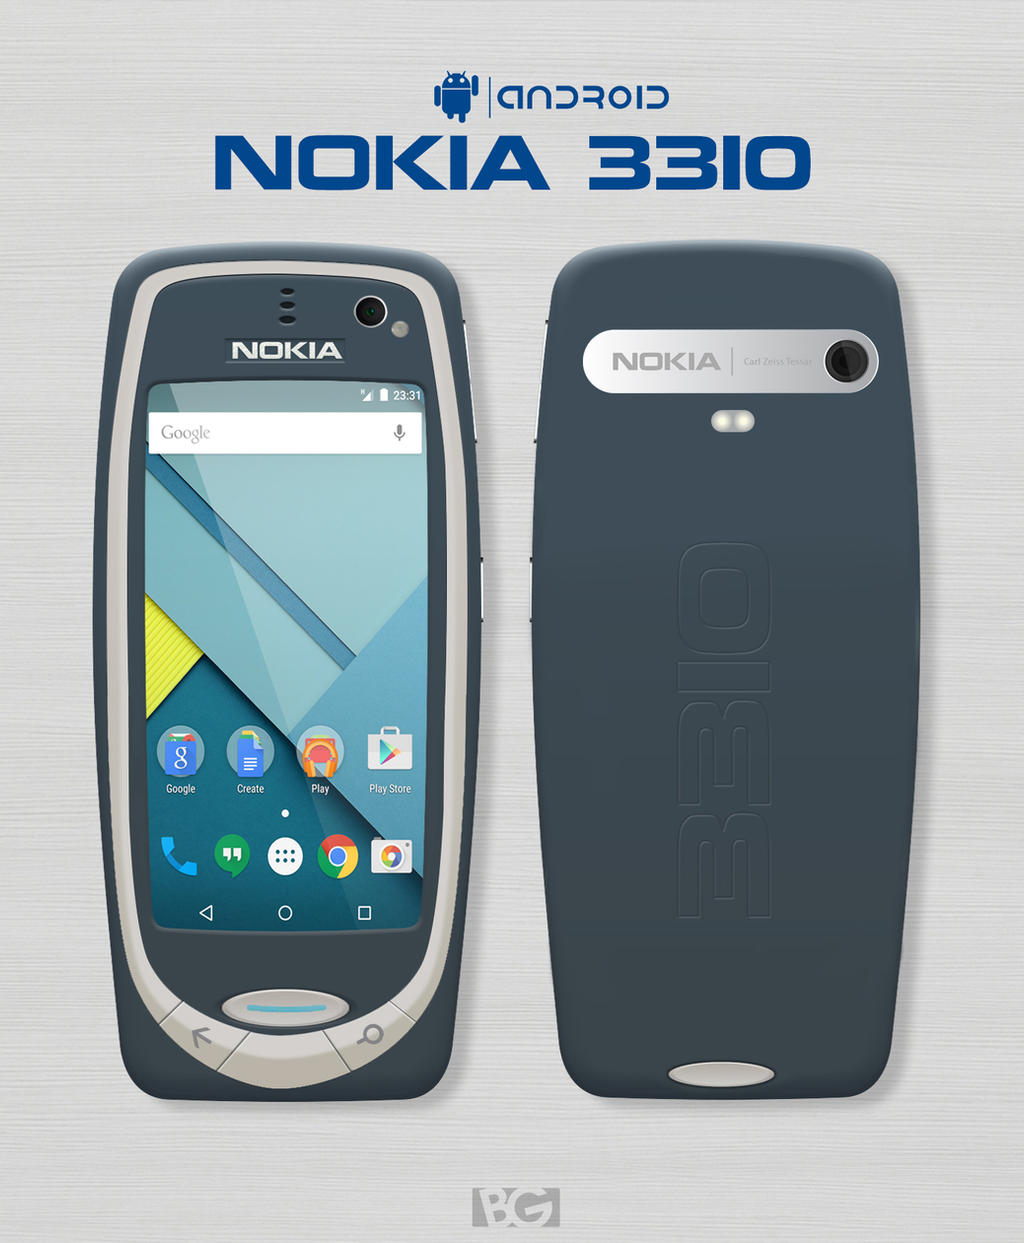 NOKIA 3310 Android